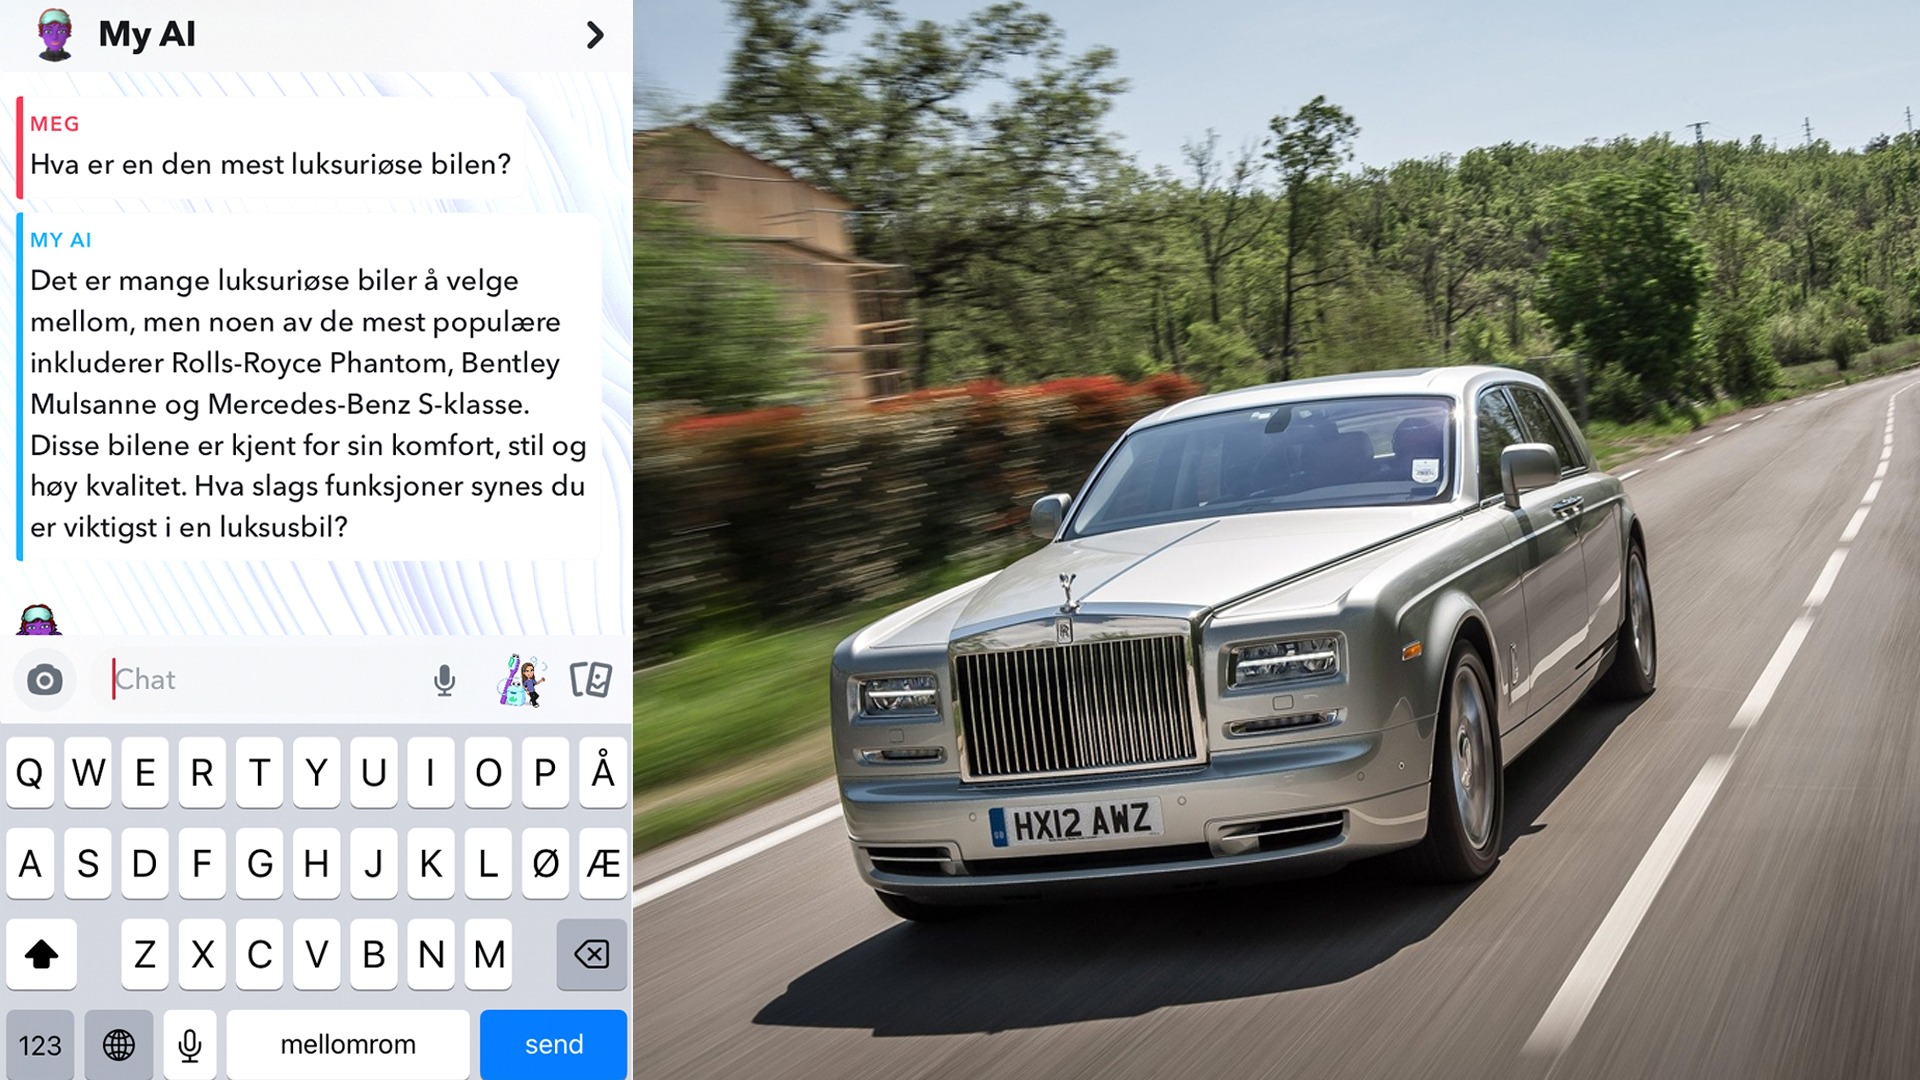 Ifølge AIen er Rolls-Royce Phantom den mest luksuriøse bilen.